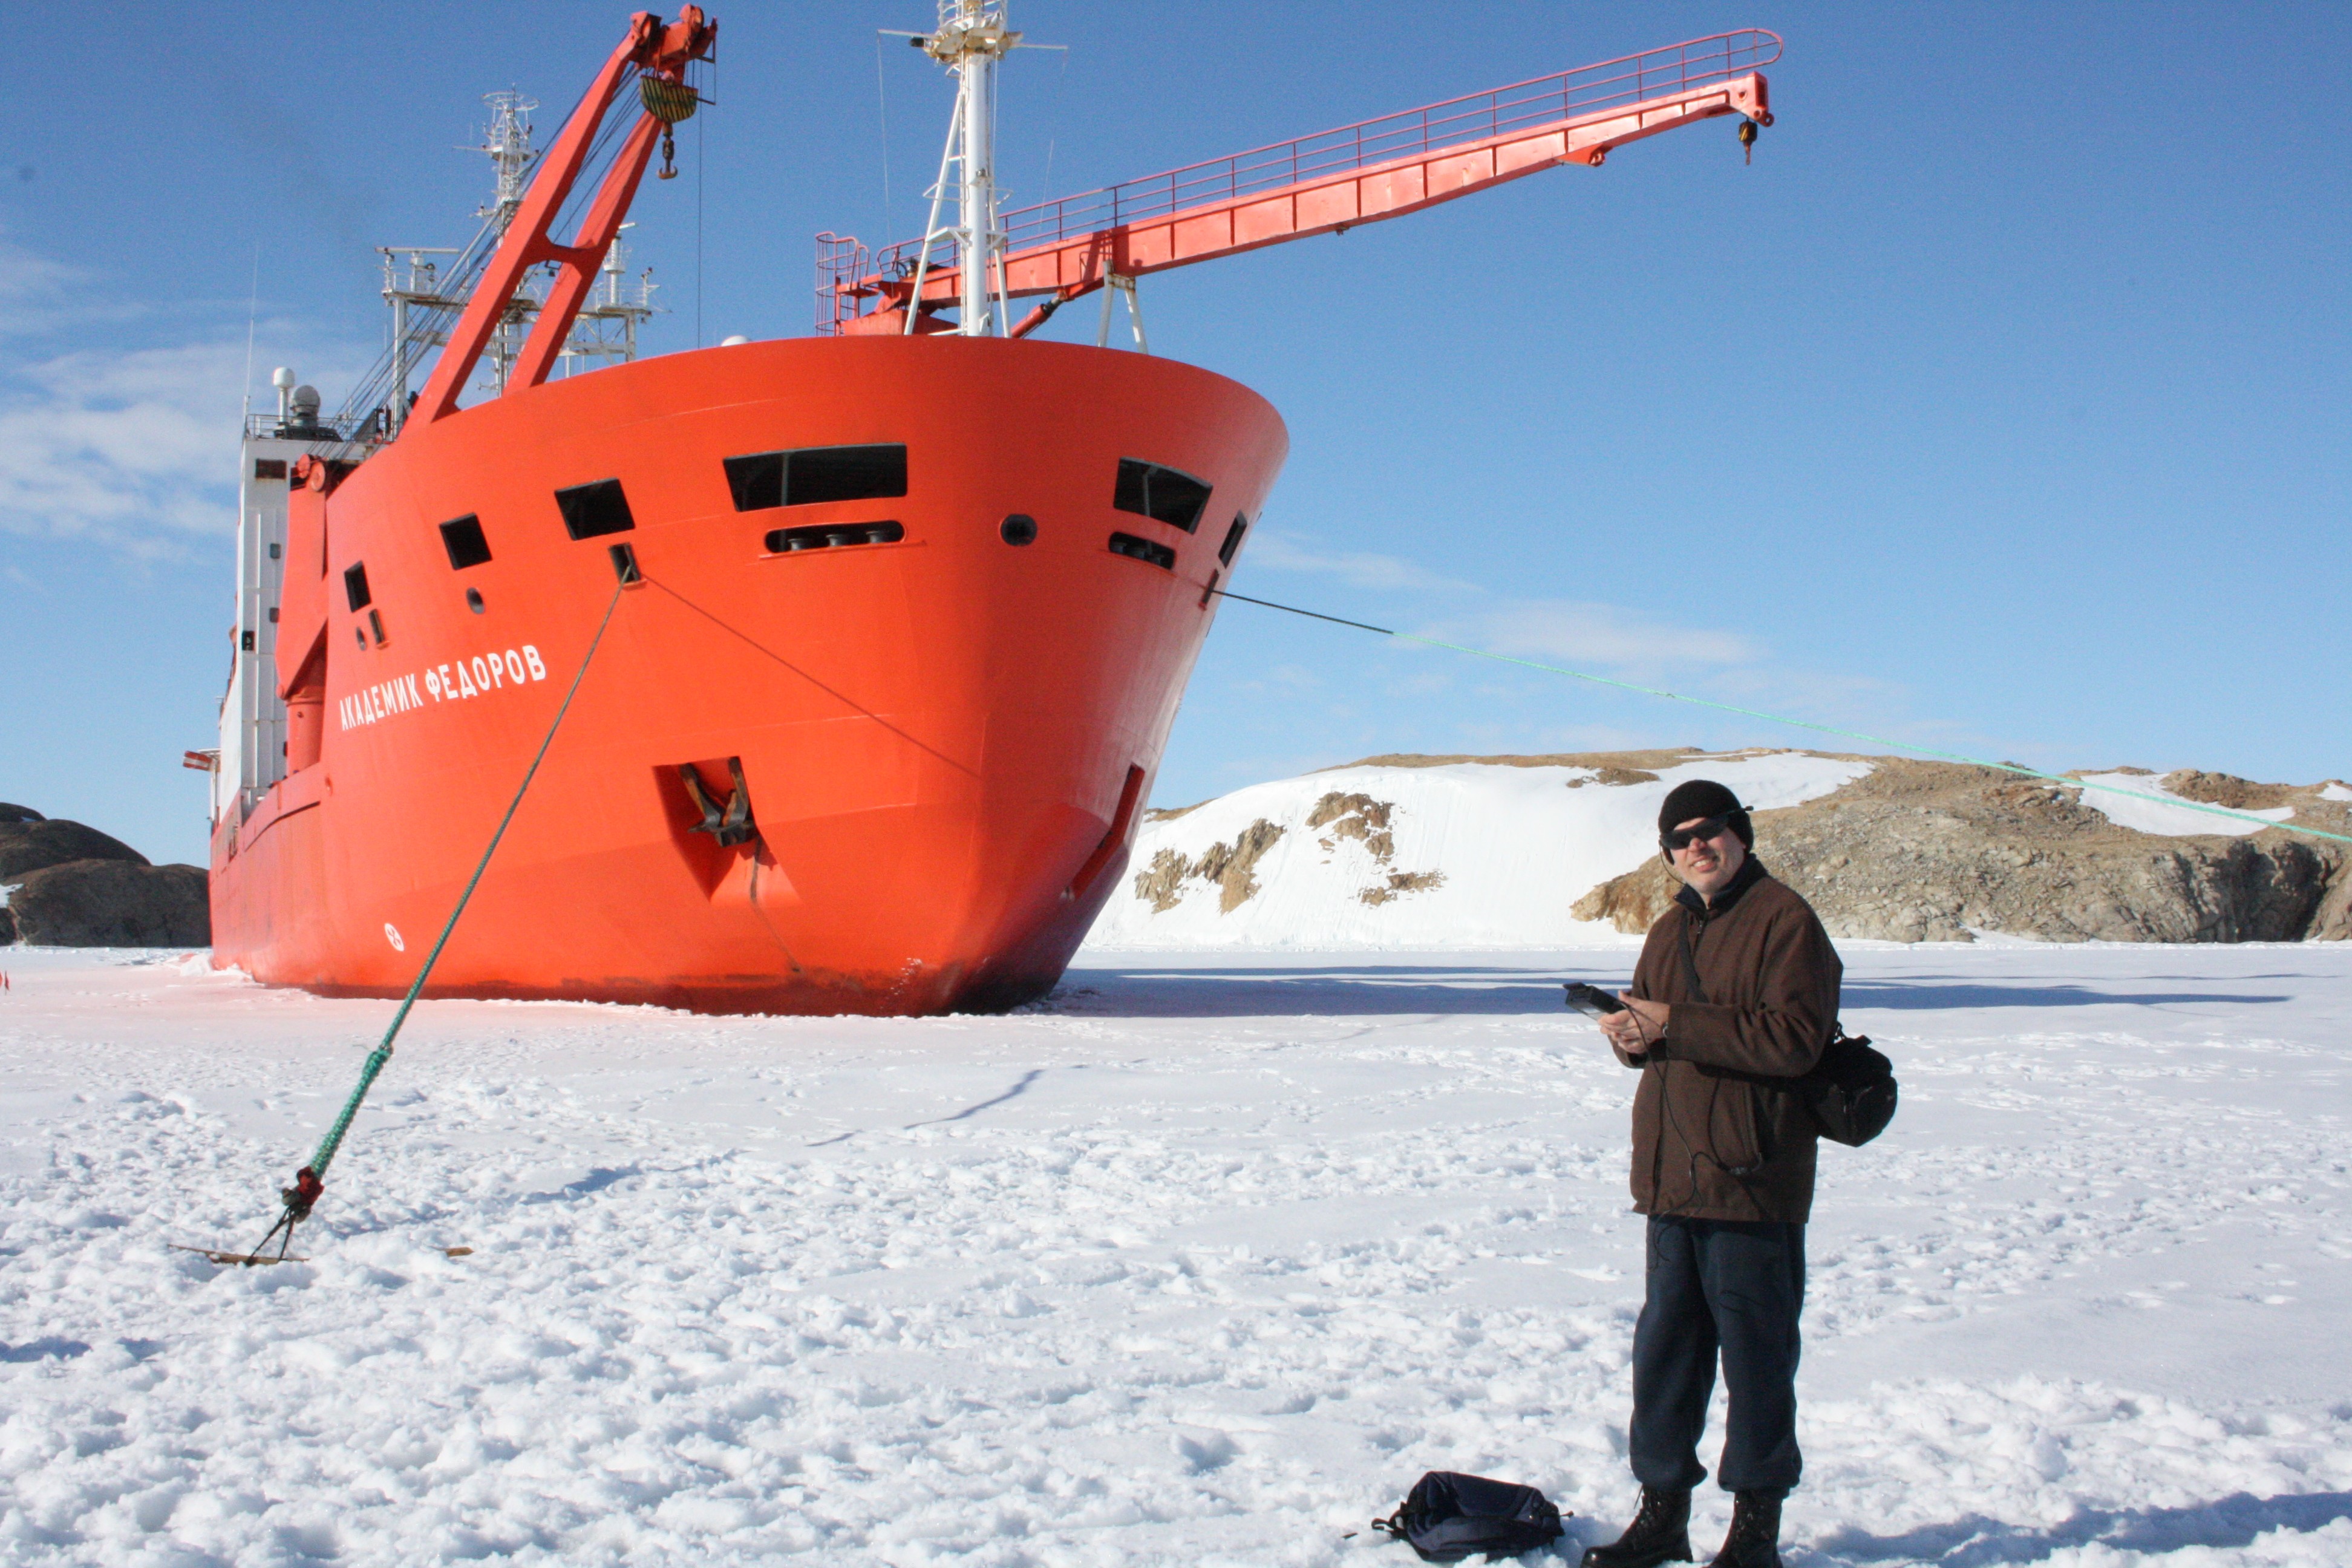 Measurements near Antarctica by Yuri Turchinovich